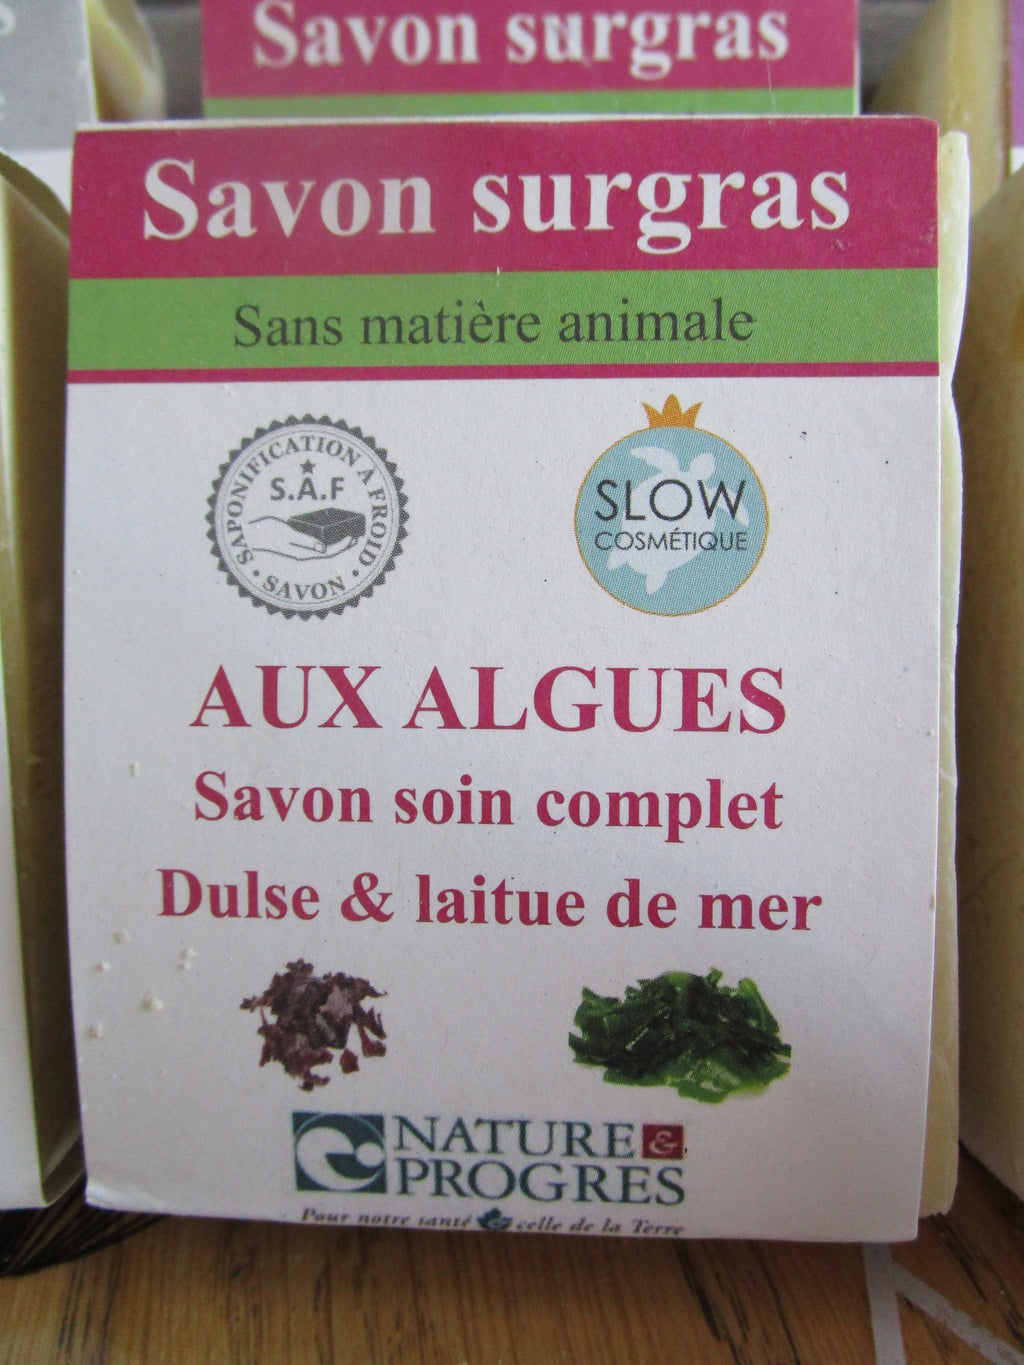 Savon pour peau mature, marque Antheya, fabrication française.